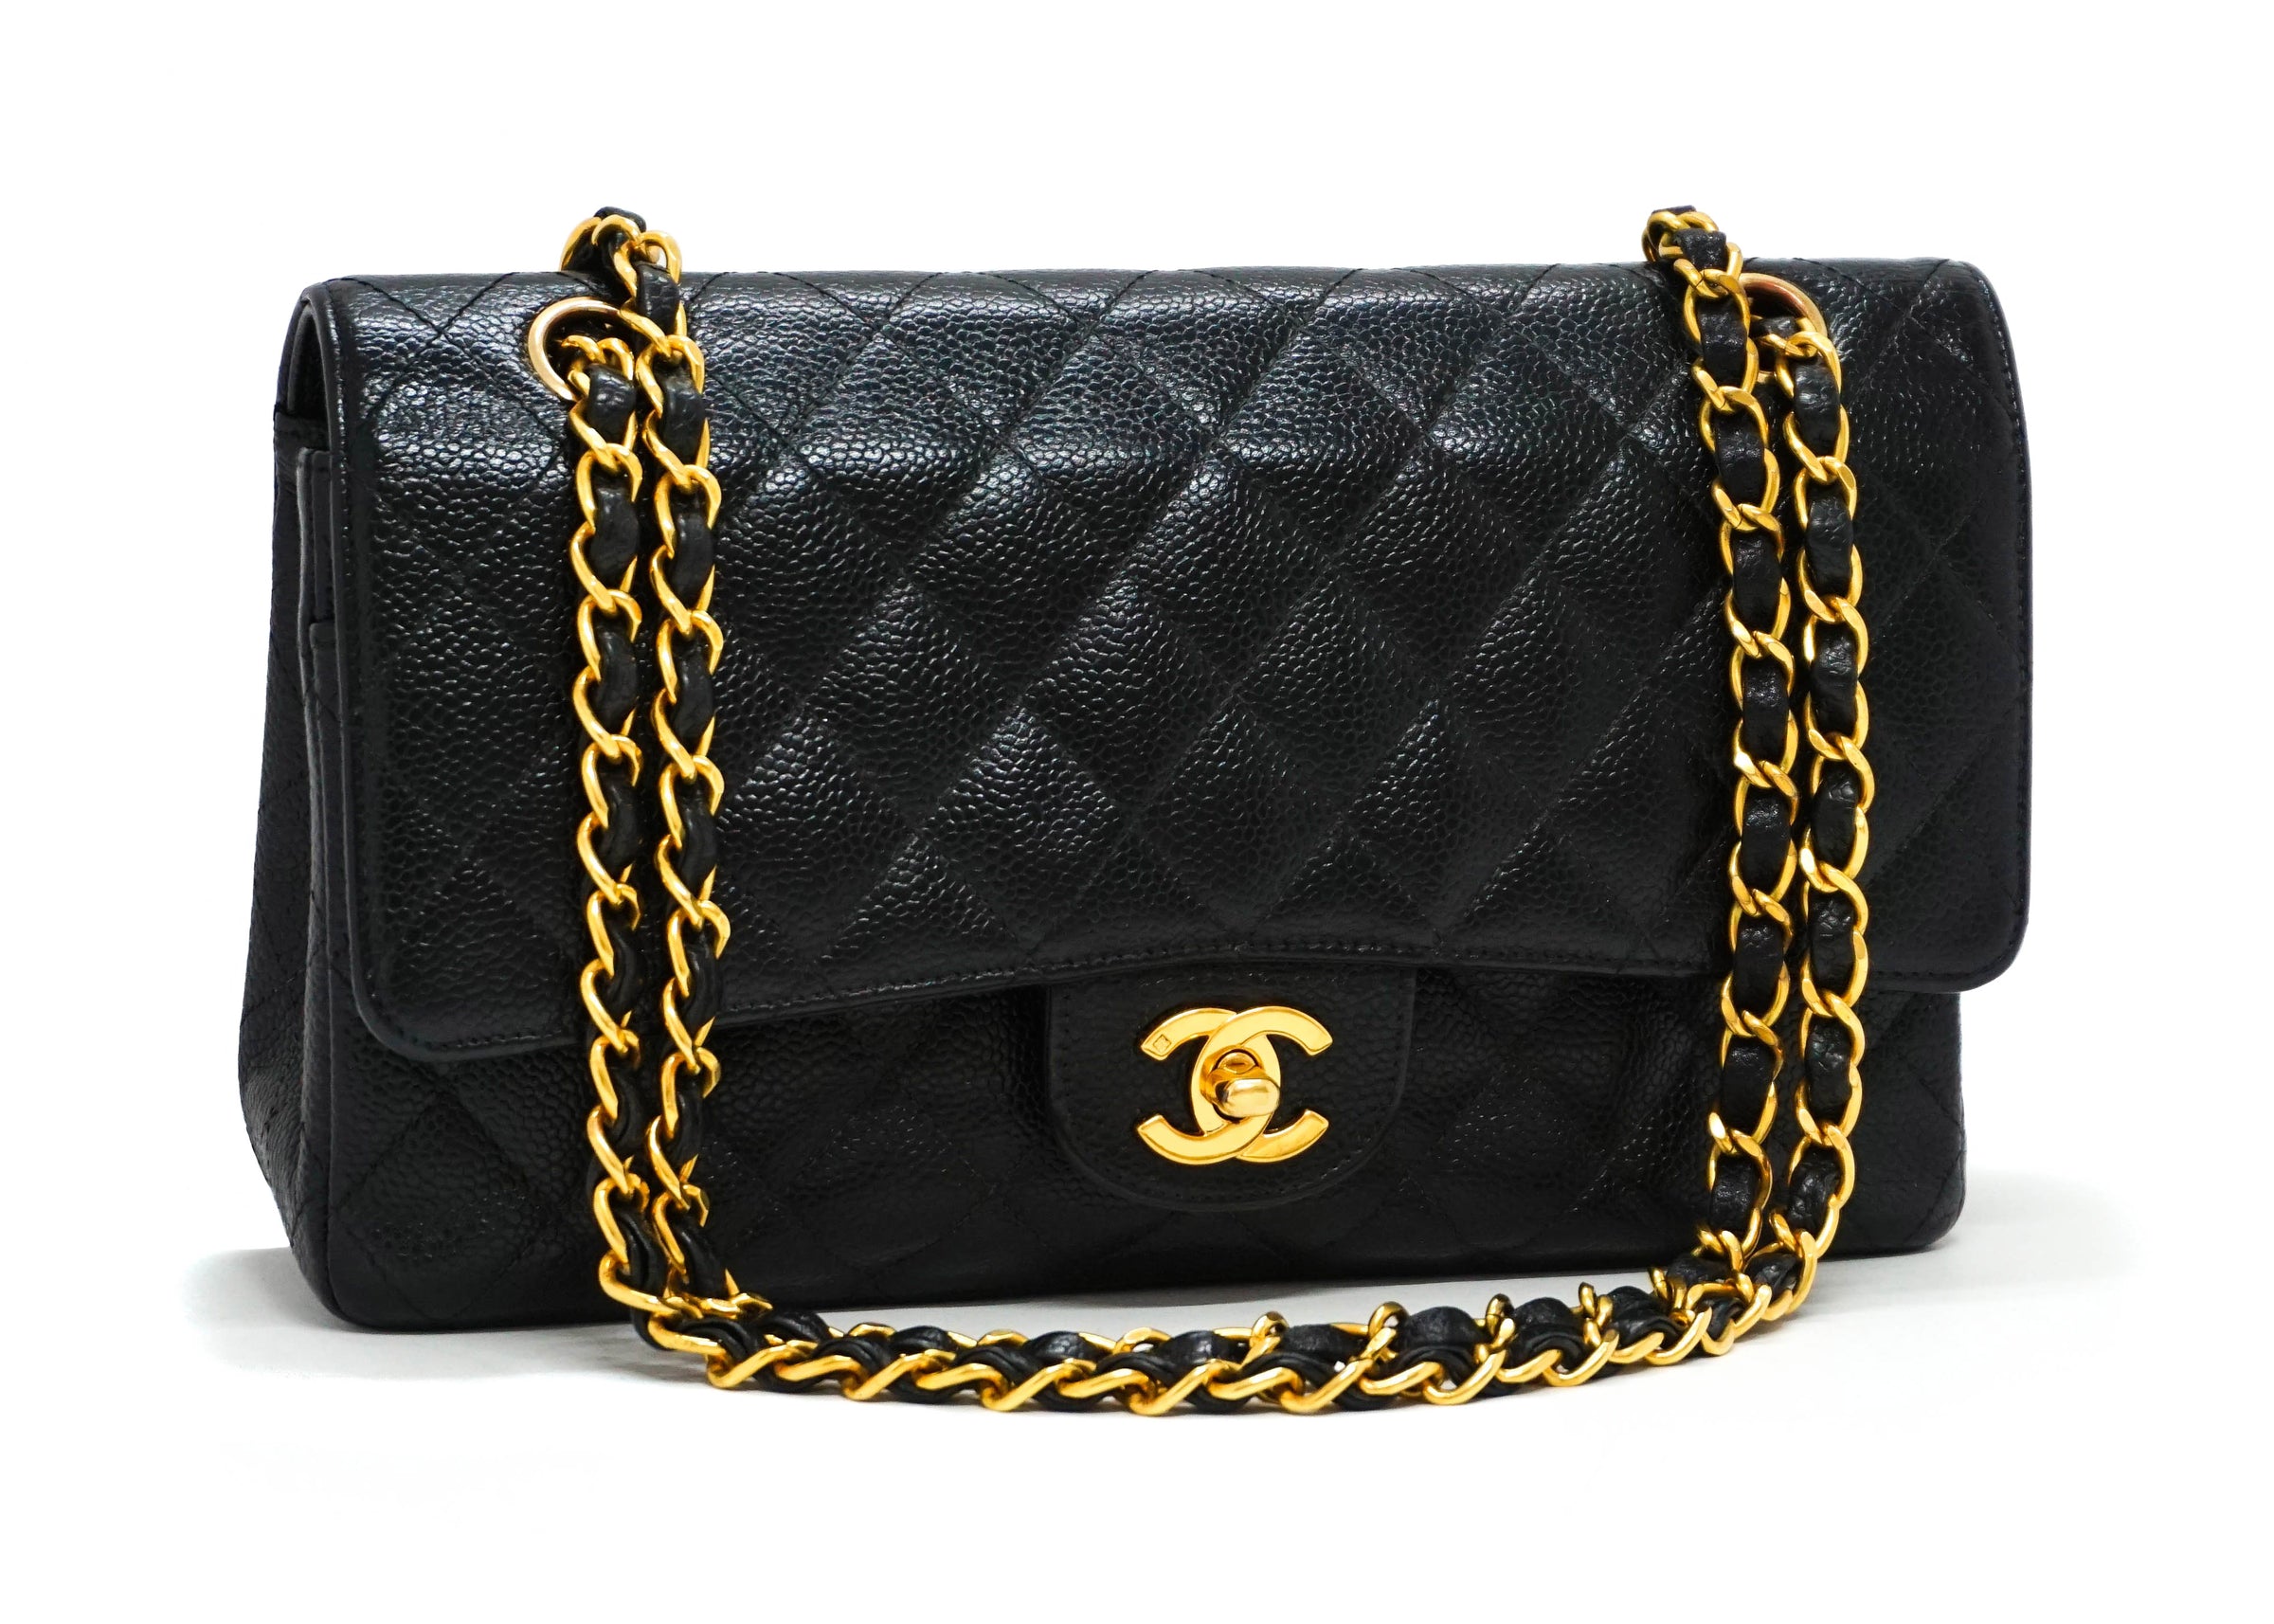 Chanel Classic Handbag Dimensions